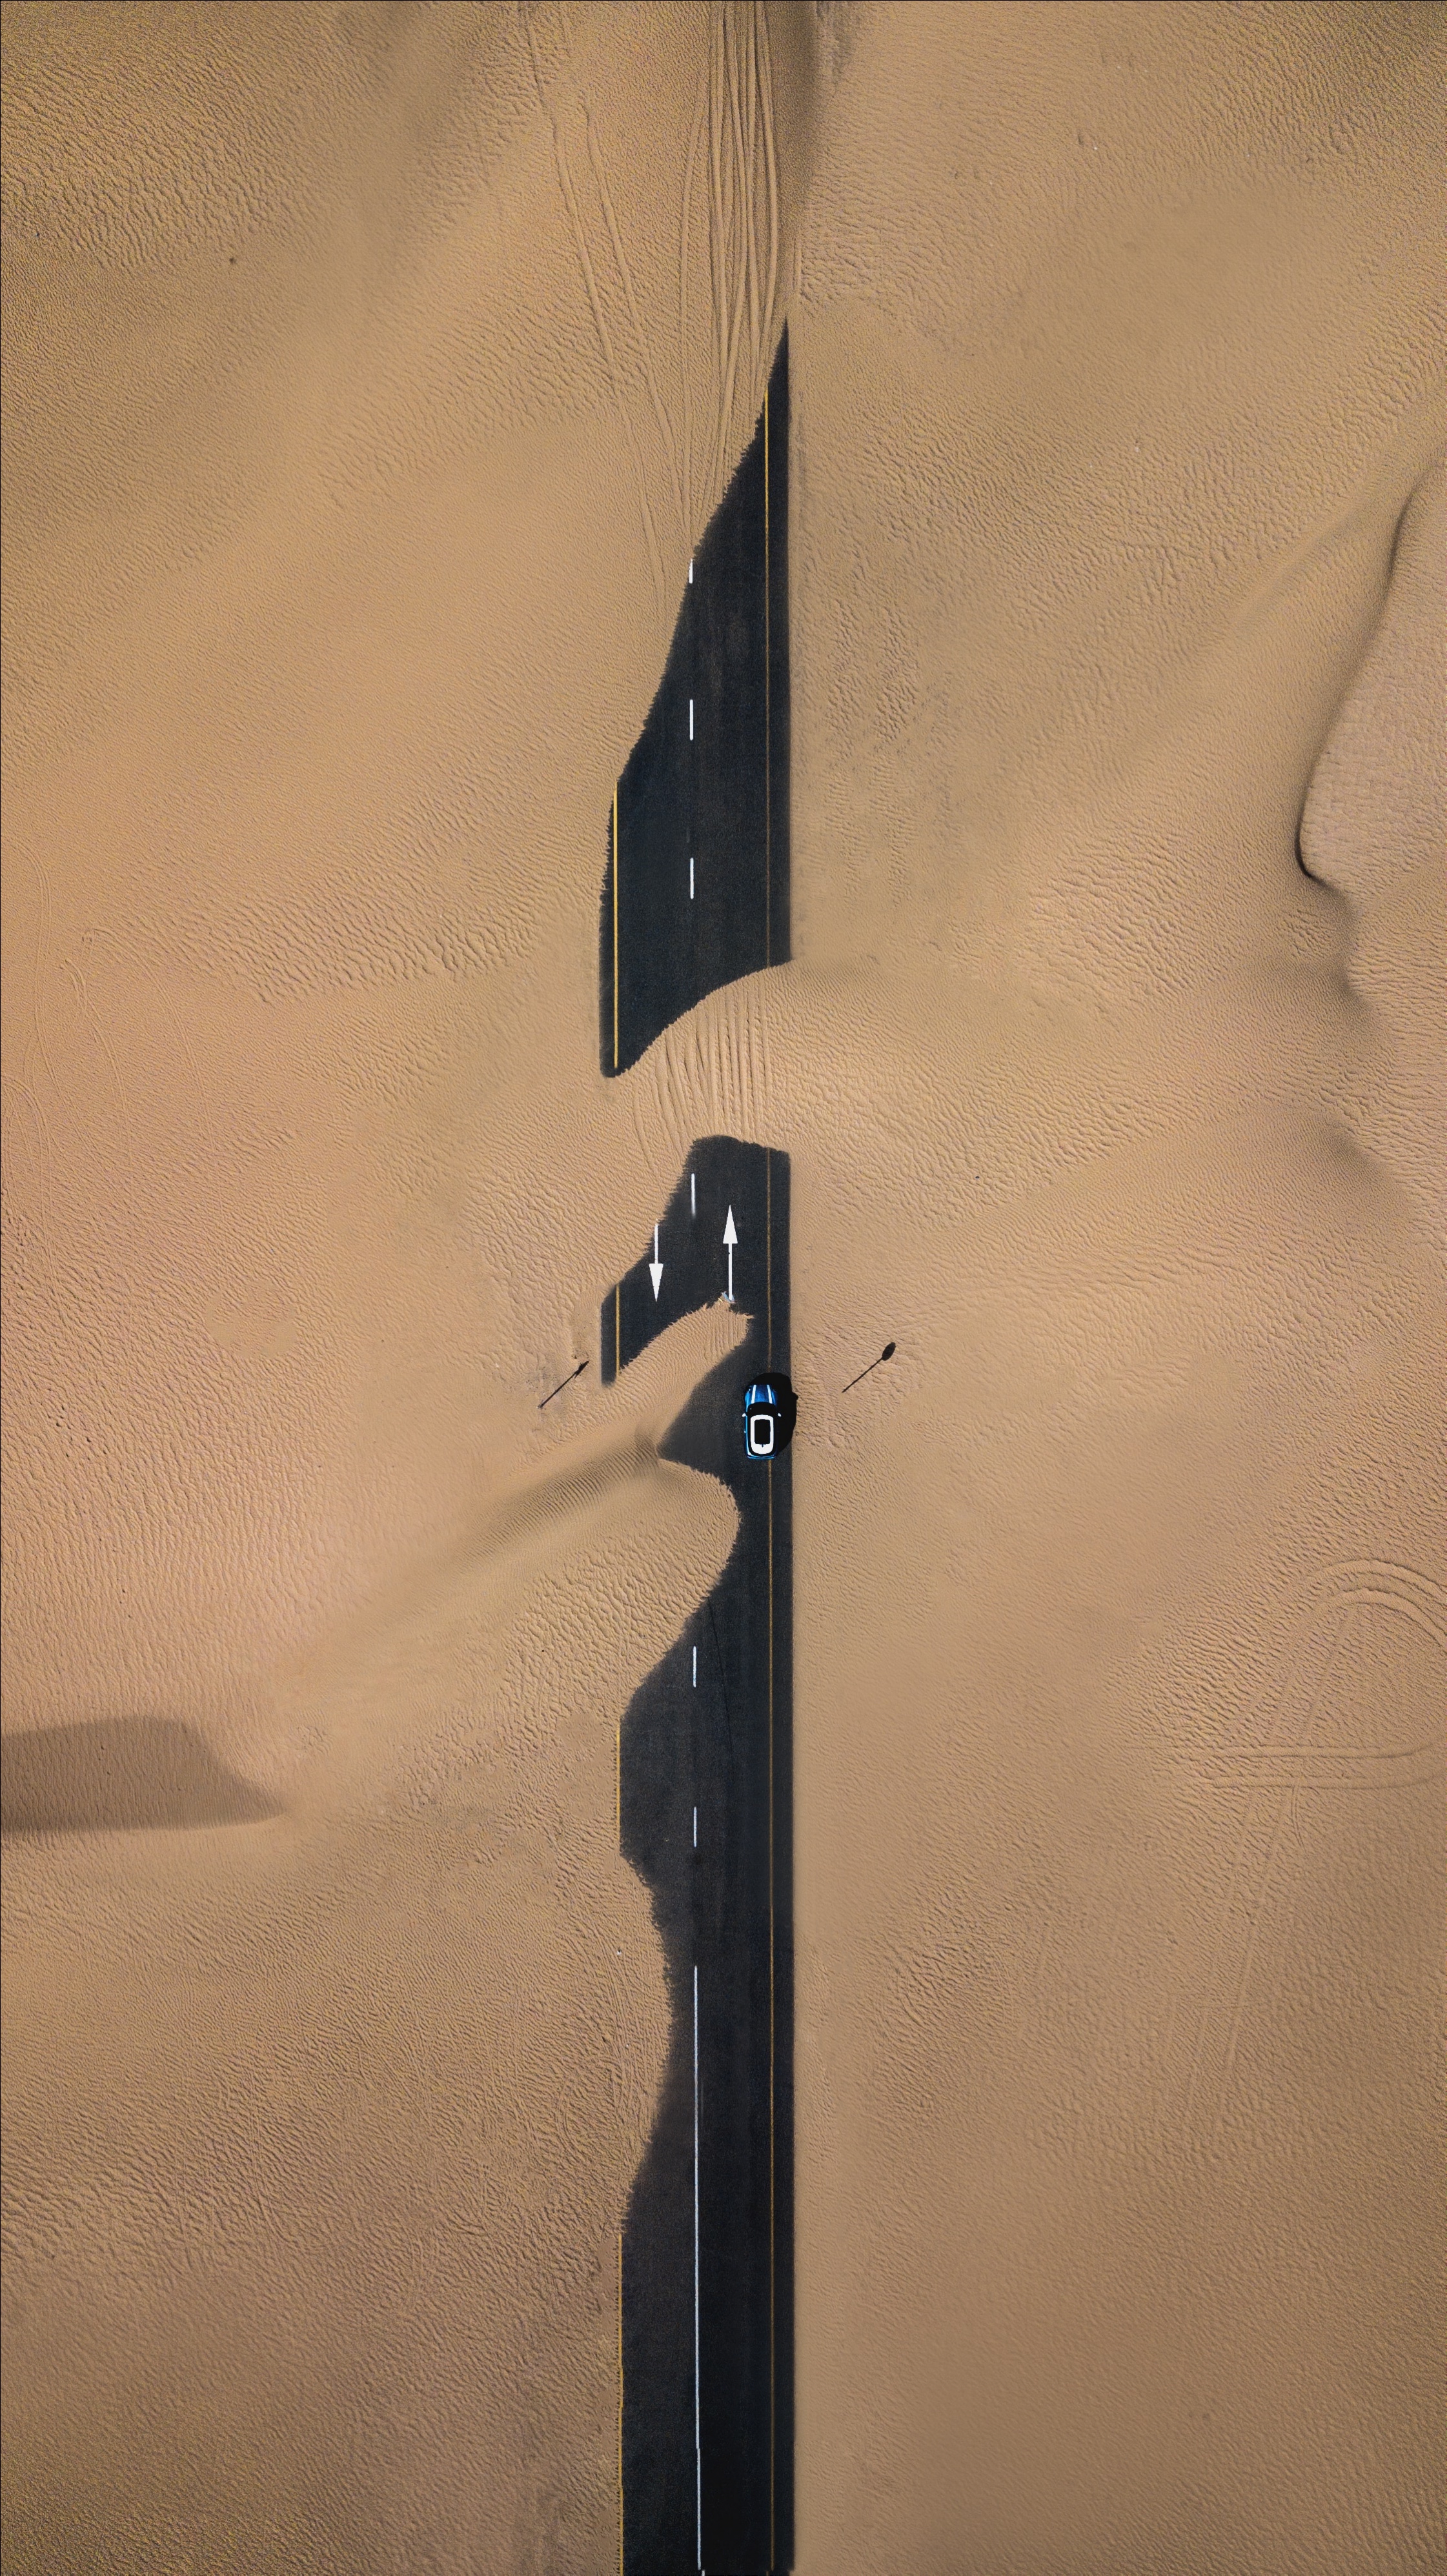 Download background minimalism, sand, desert, road, dunes, links